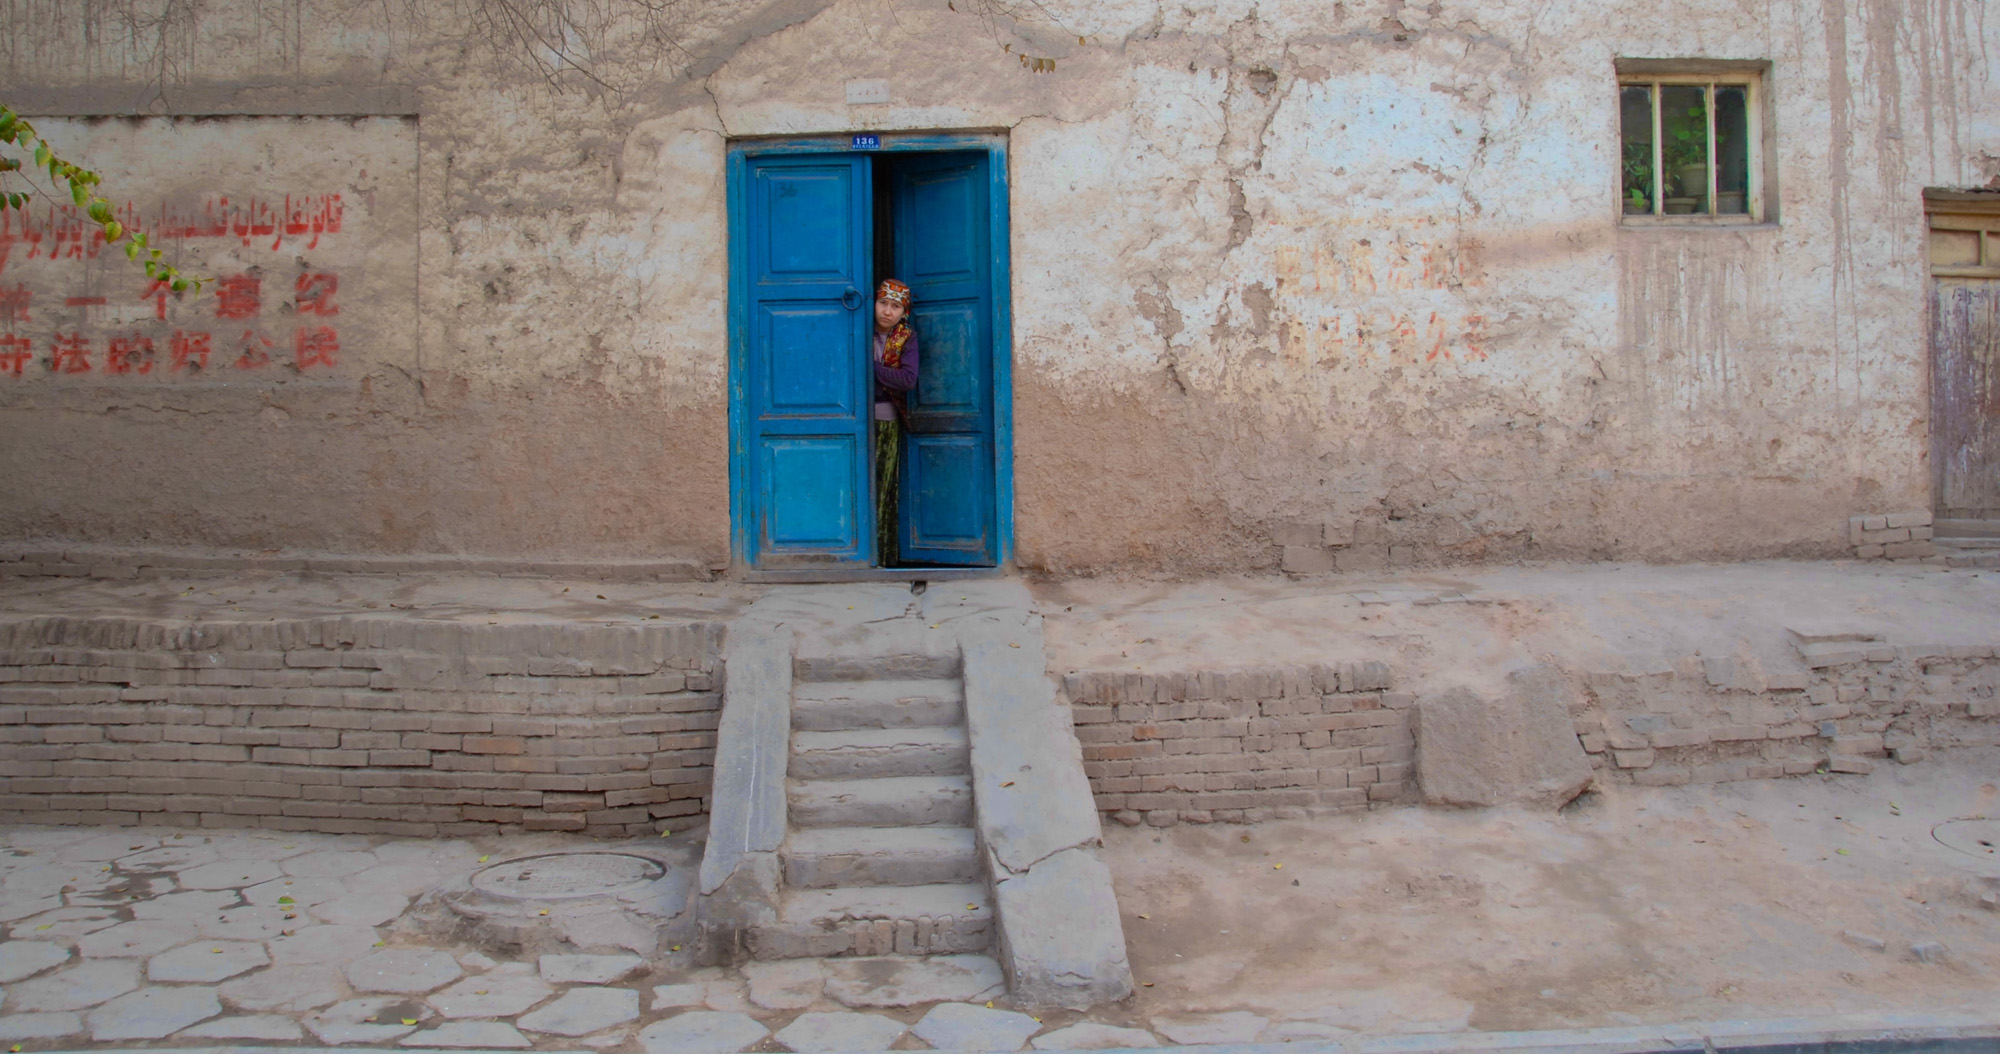 Kashgar, a people in distress